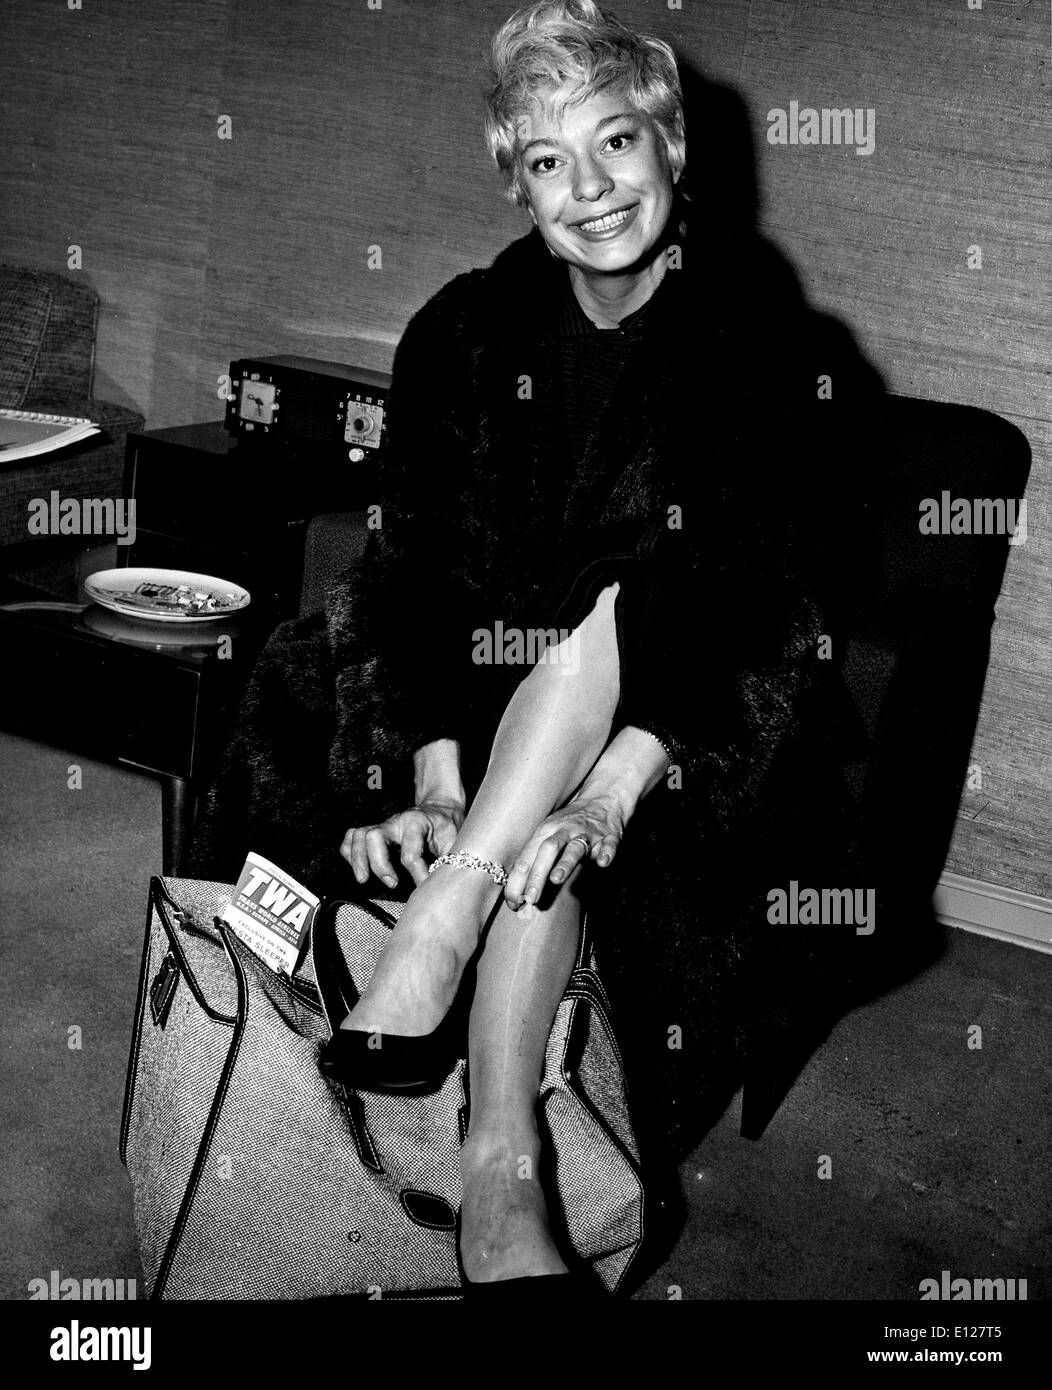 Apr 01, 2009 - Londres, Angleterre, Royaume-Uni - Carol Channing. Elaine Carol Channing né le 31 janvier 1921, Seattle, Washingt Banque D'Images